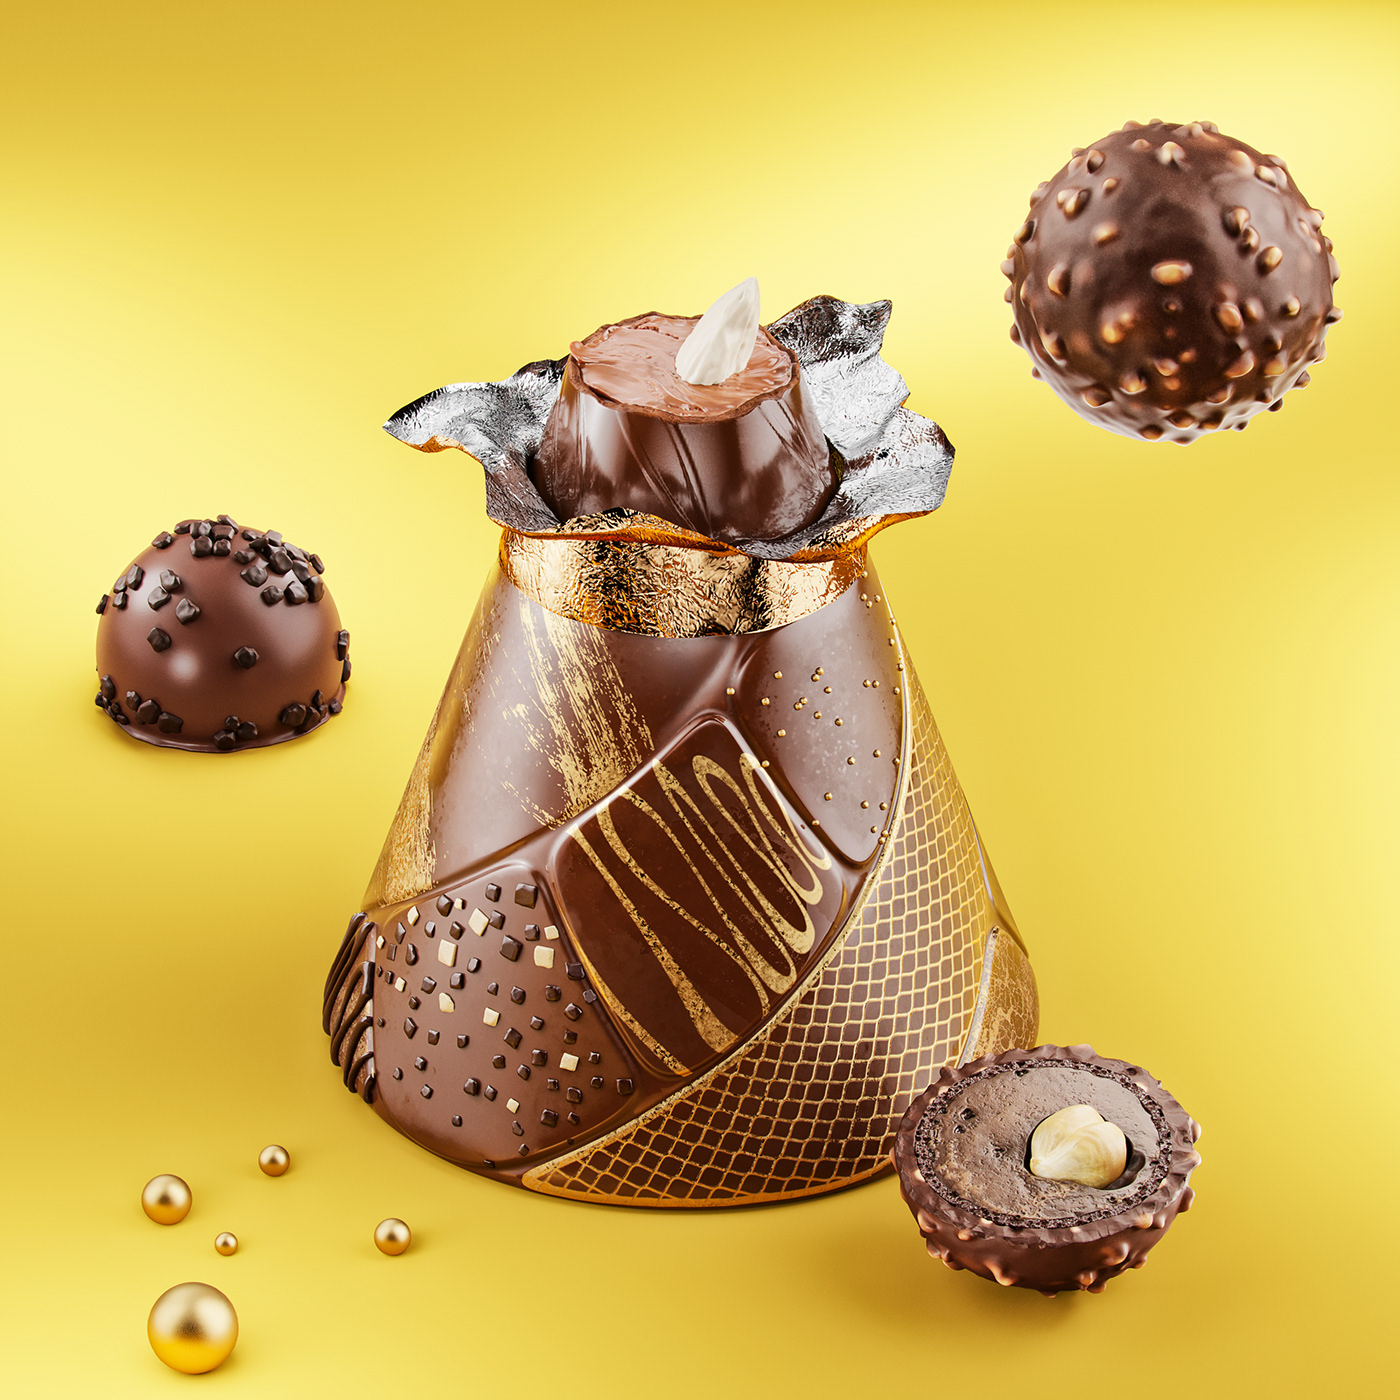 3D 3dcandy 3dFood 3dsweet Candy CGI cgifood Chokolate Sculpt sweet